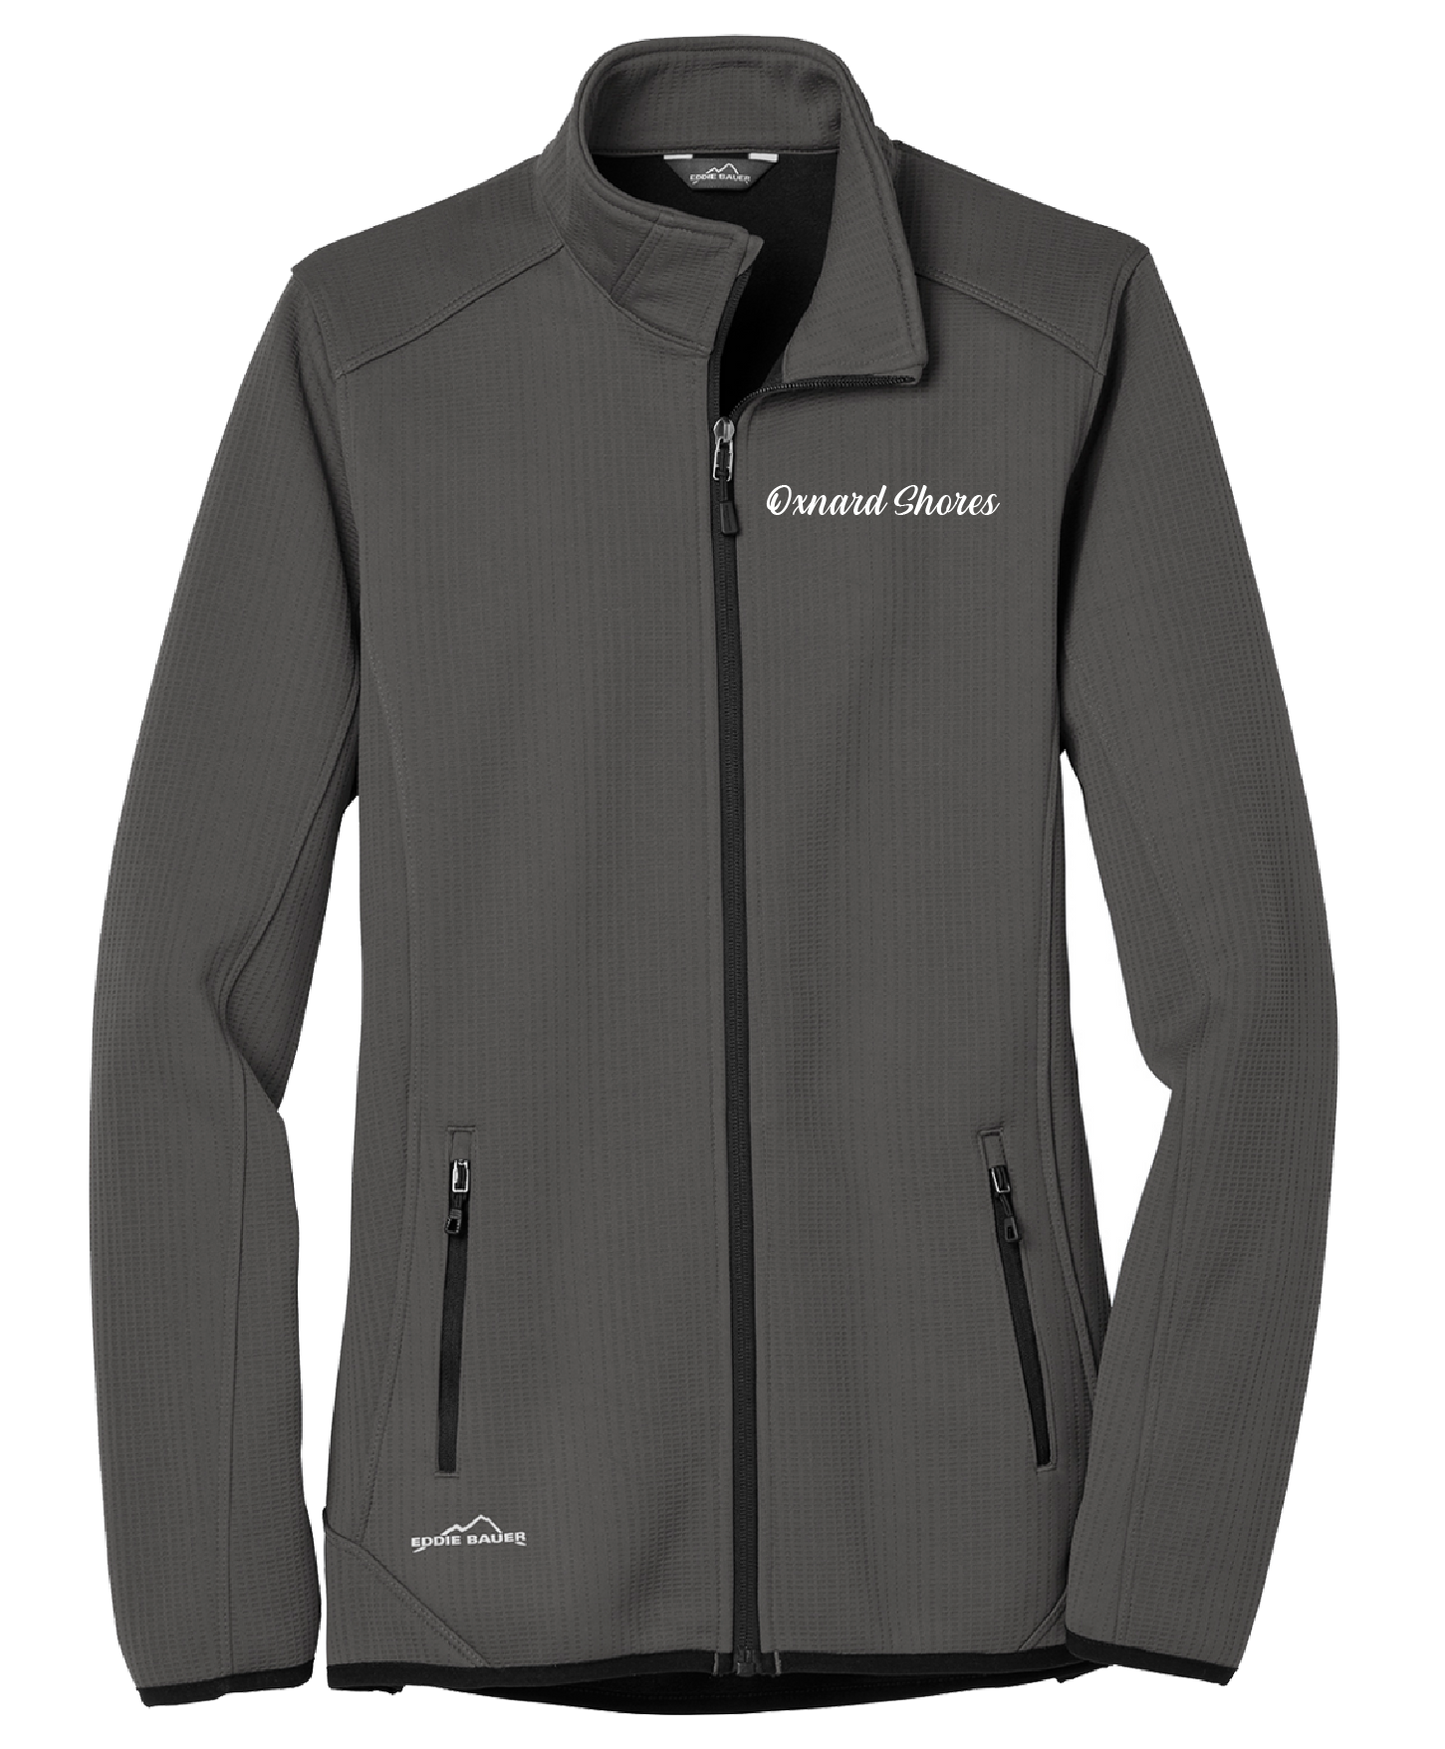 Oxnard Shores - Ladies - Eddie Bauer ® Dash Full-Zip Fleece Jacket